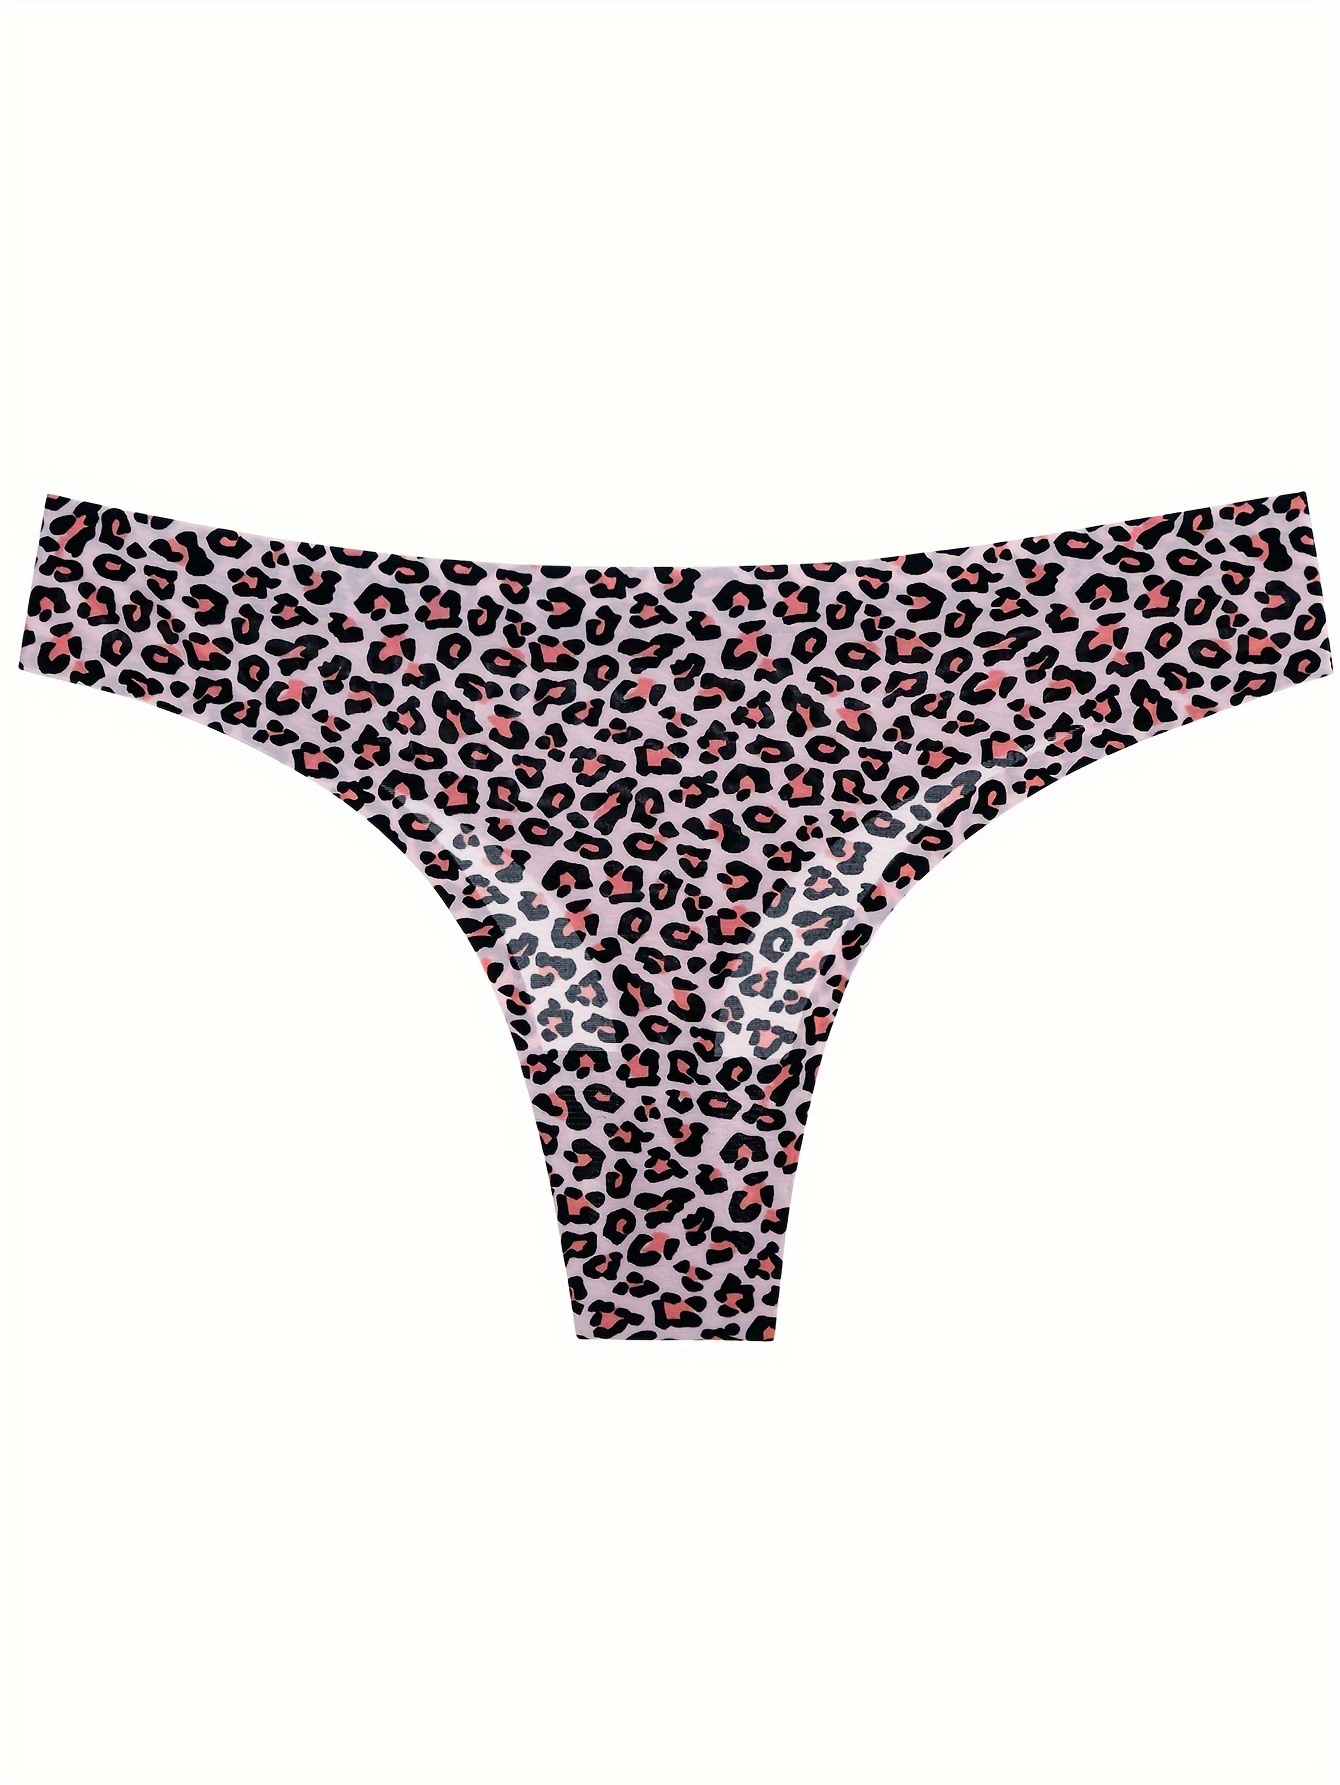 Leopard Print Underwear Panti,Big Size Panty Woman,Extra Large Women's  Briefs,Oversized Women's Panties,Plus Size Underpants